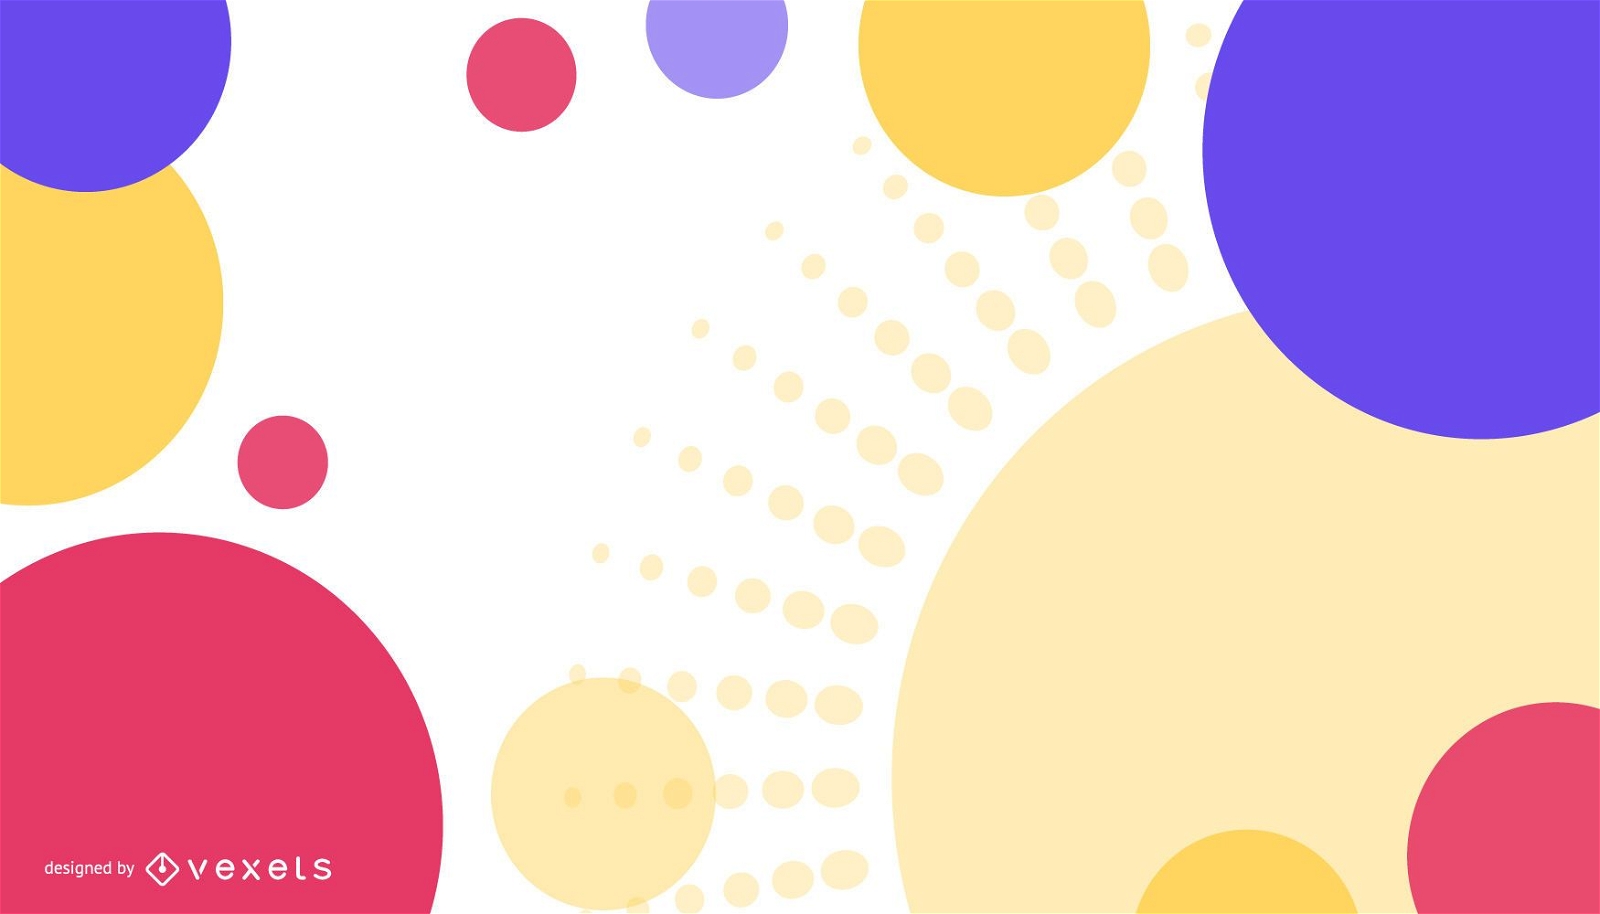 Colorful circles geometric background design